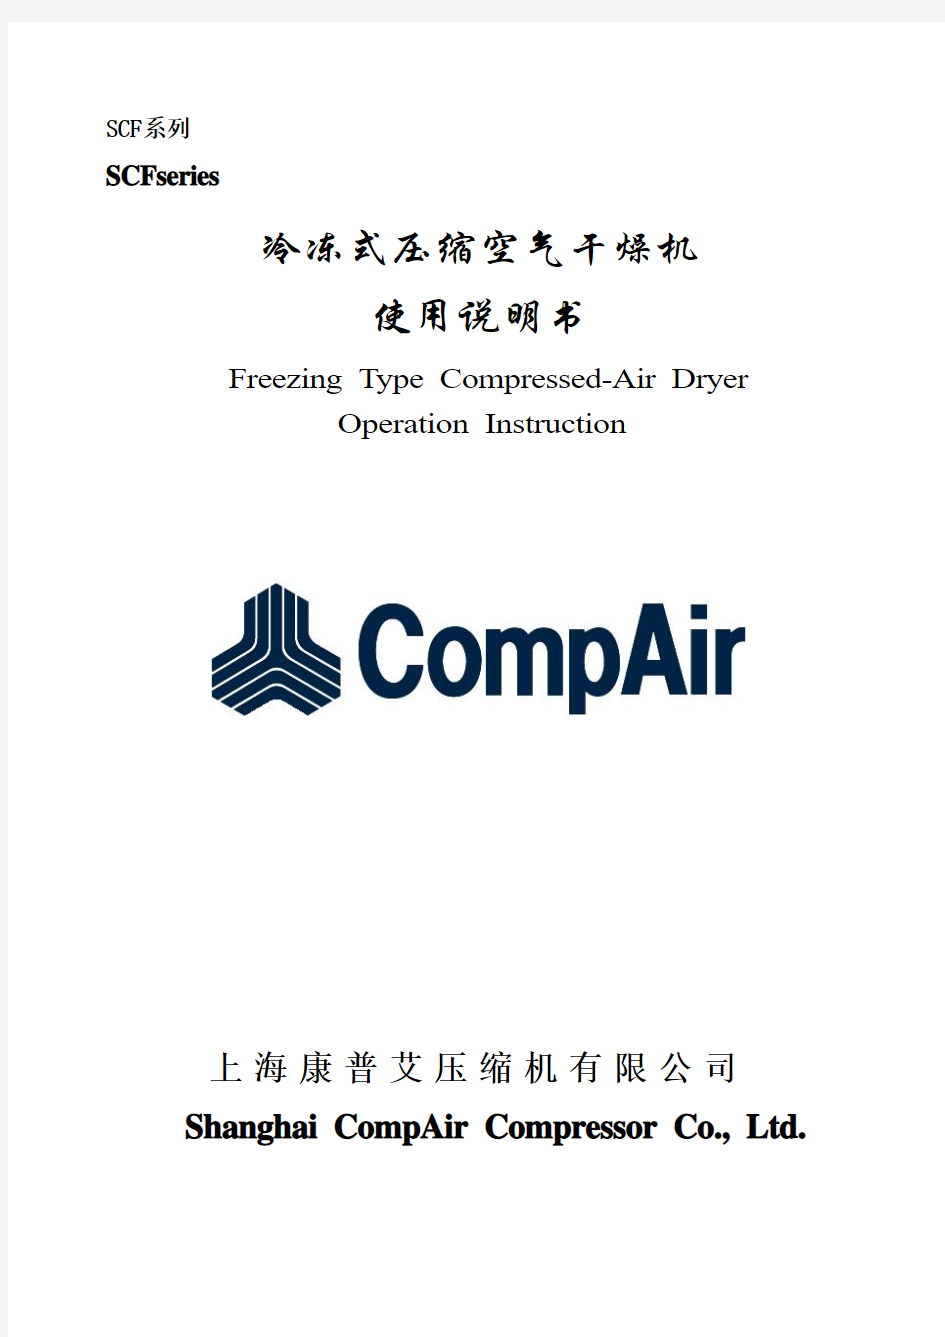 CompAir冷冻式干燥机使用说明书